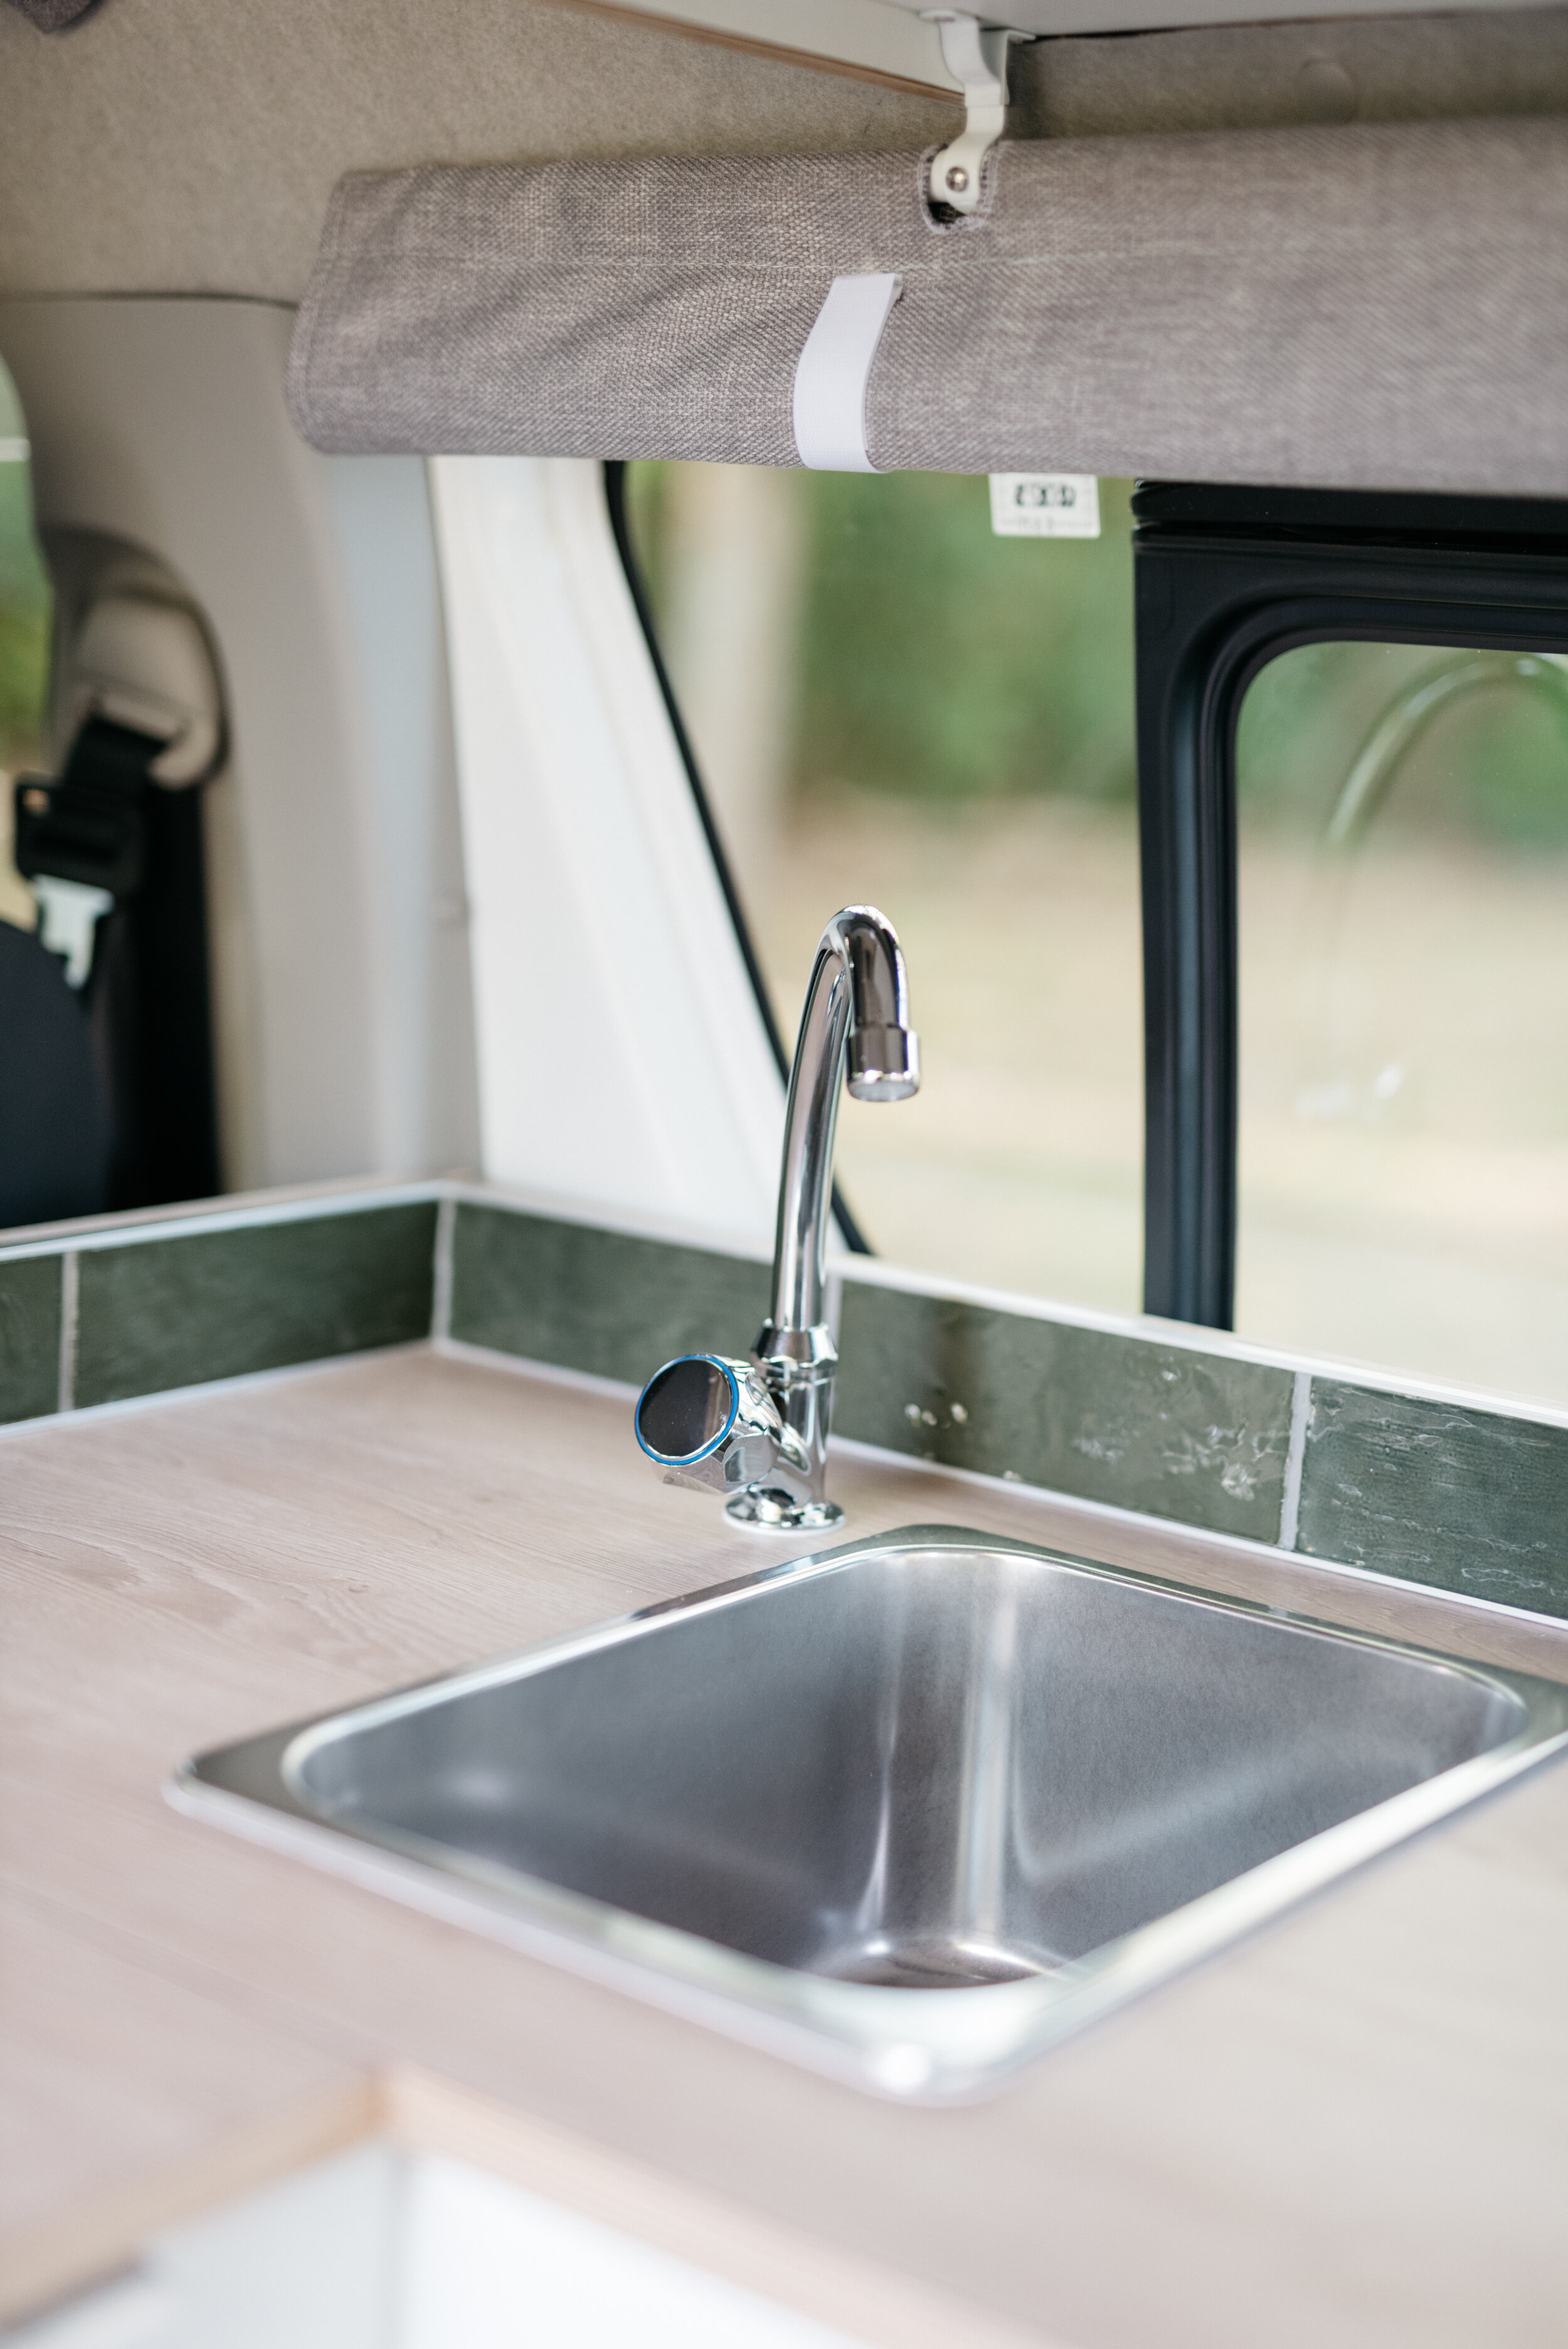 Toyota Hiace Camper Conversion Kitchen Sink